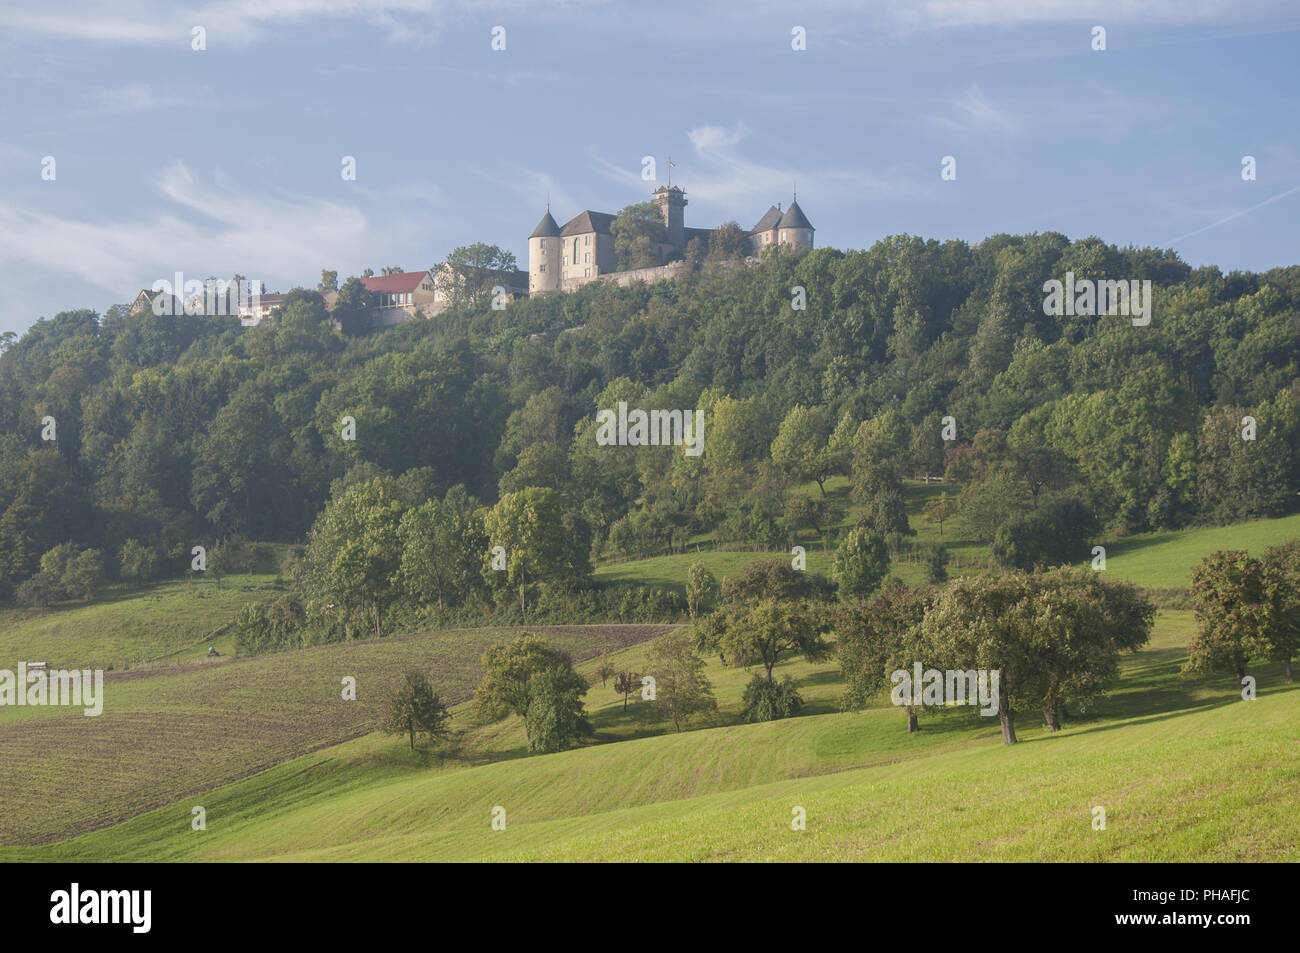 Castle Waldenburg in the Hohenlohe region, Germany Stock Photo